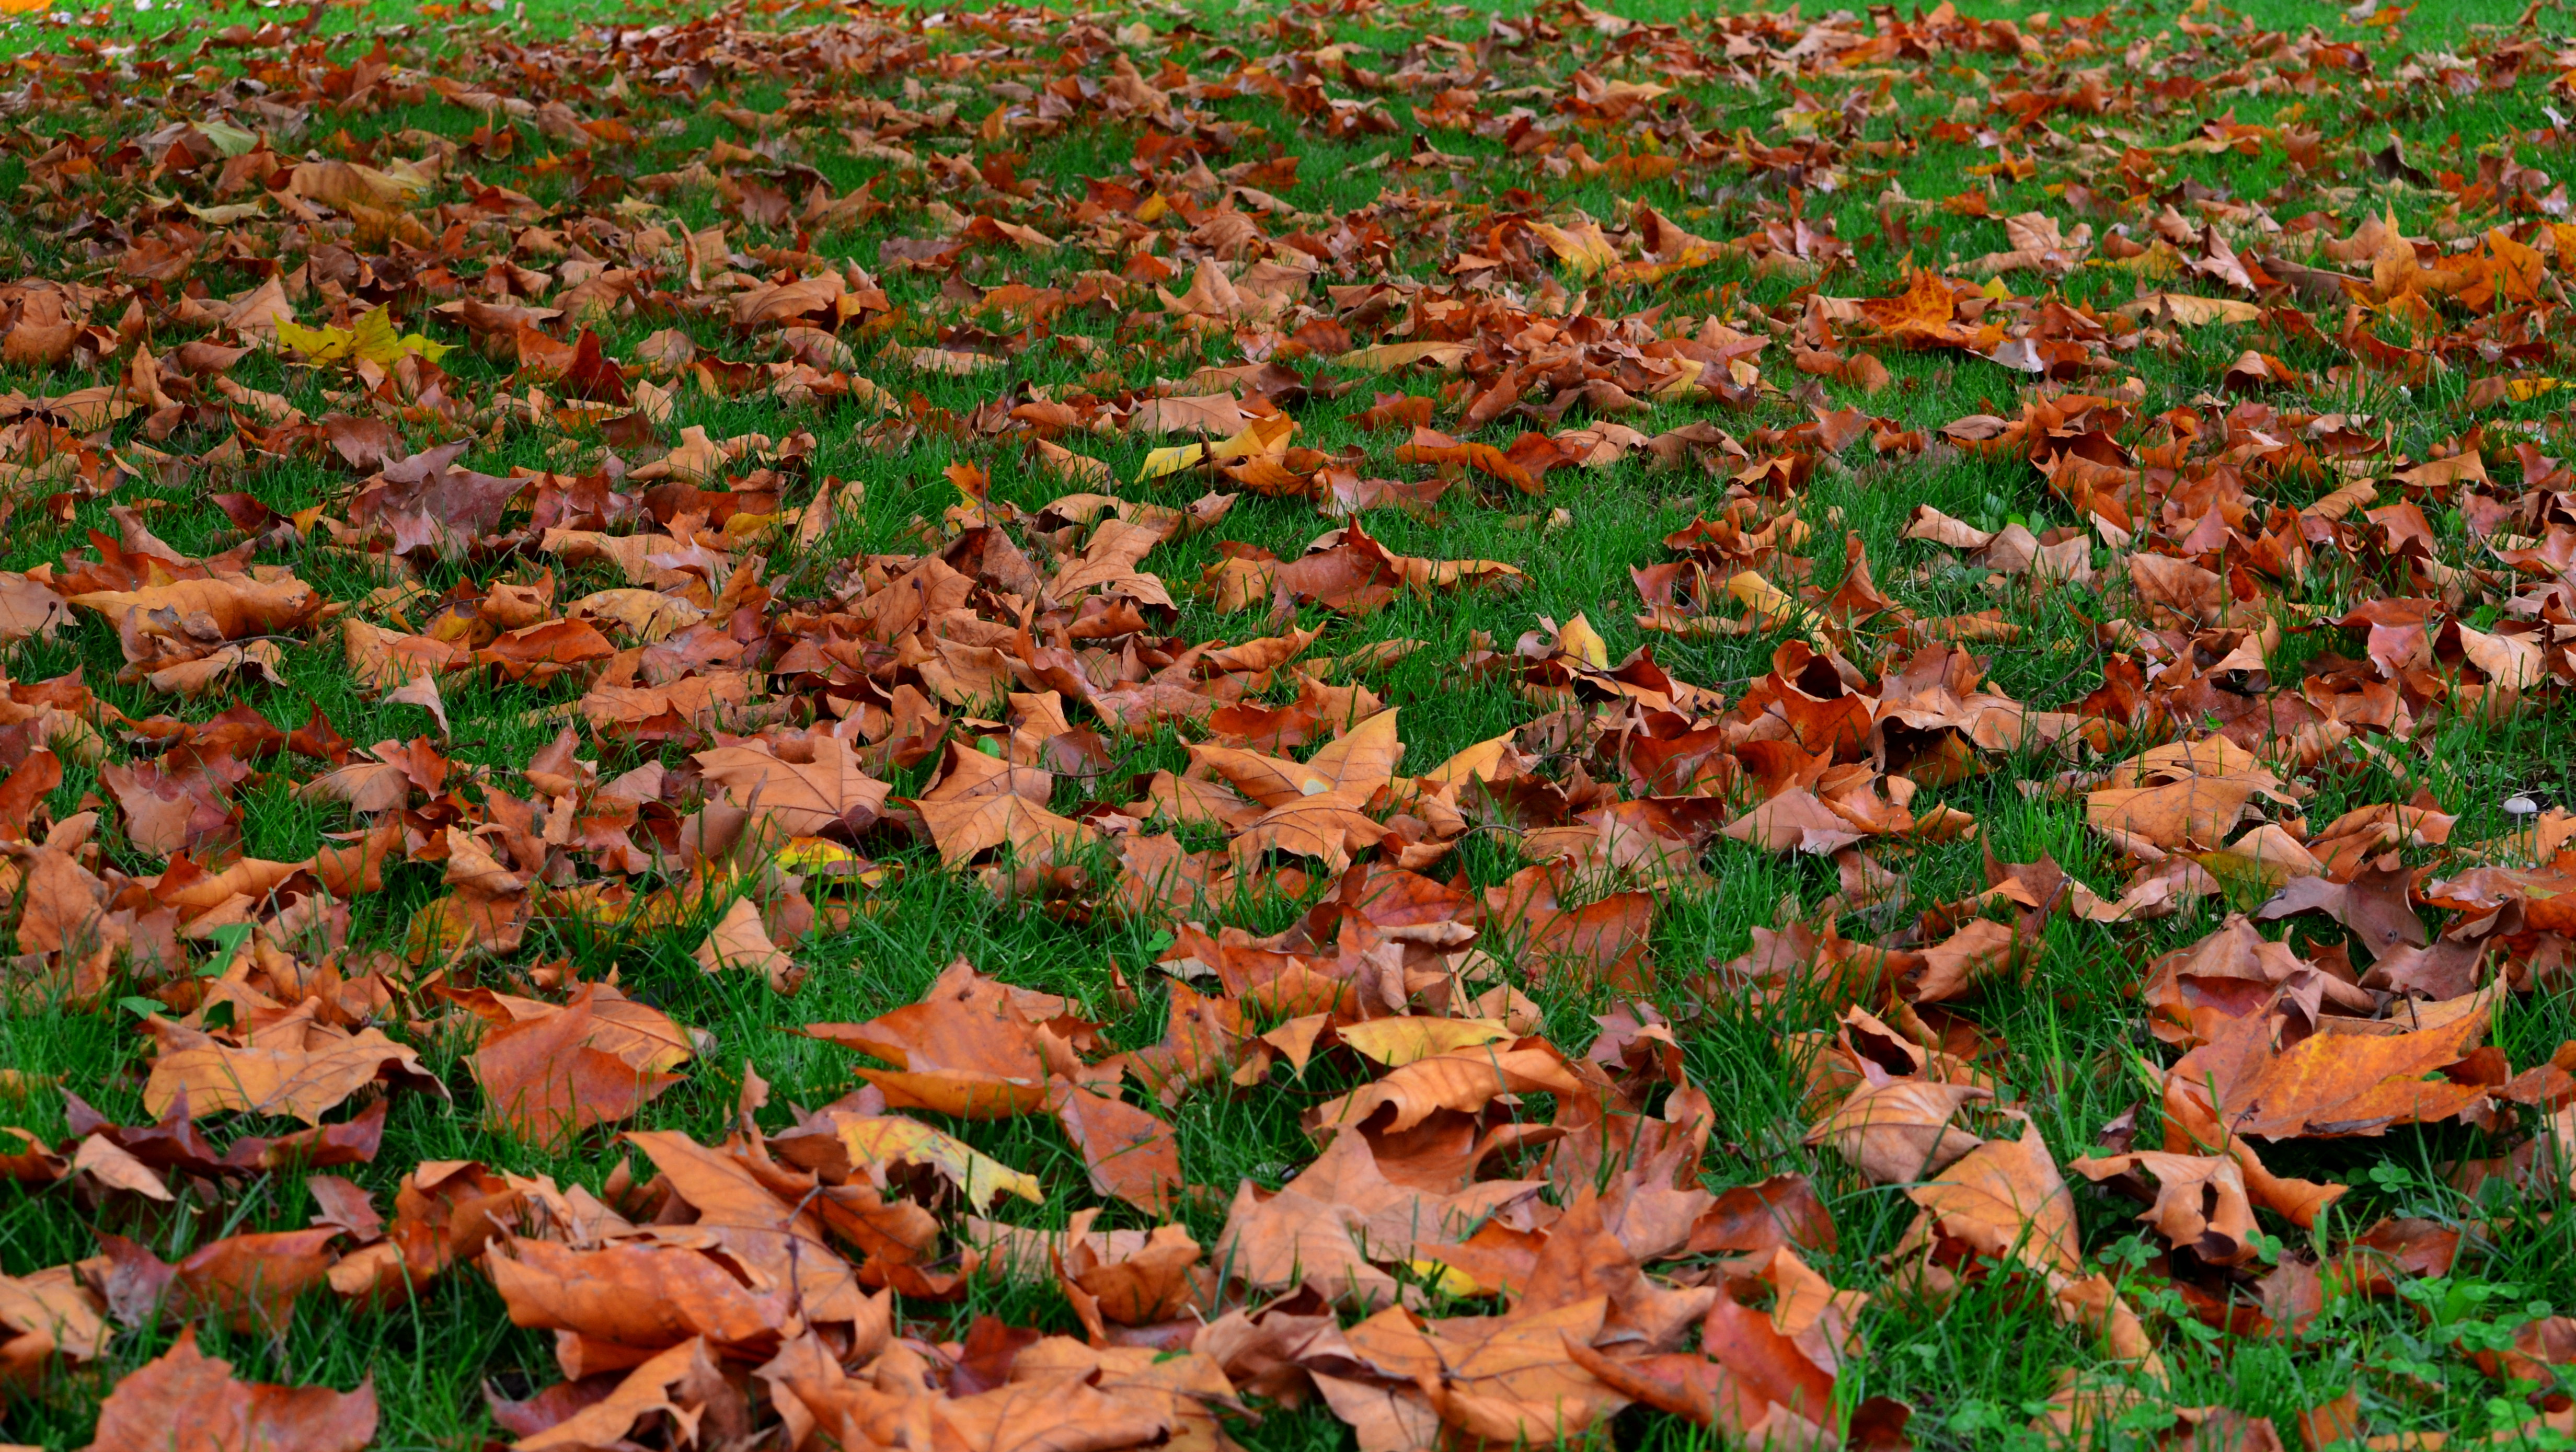 File:Fallen leaves on green grass.JPG - Wikimedia Commons